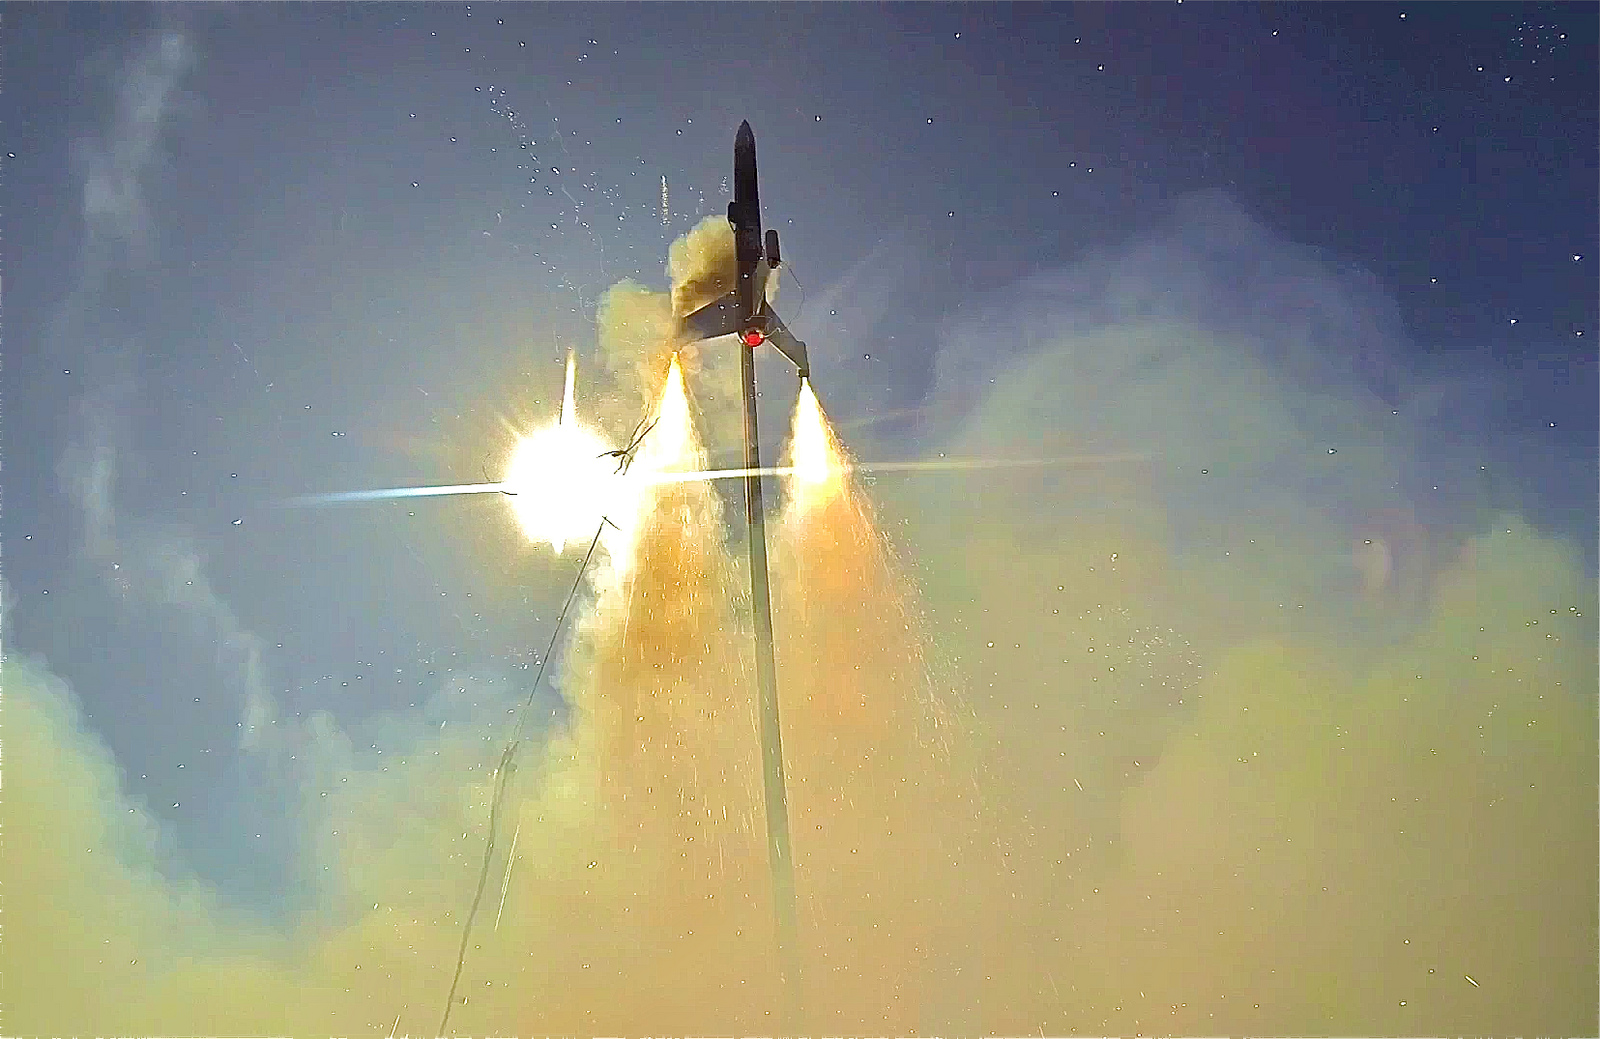 Rocket launch - Photo by Steve Jurvetson